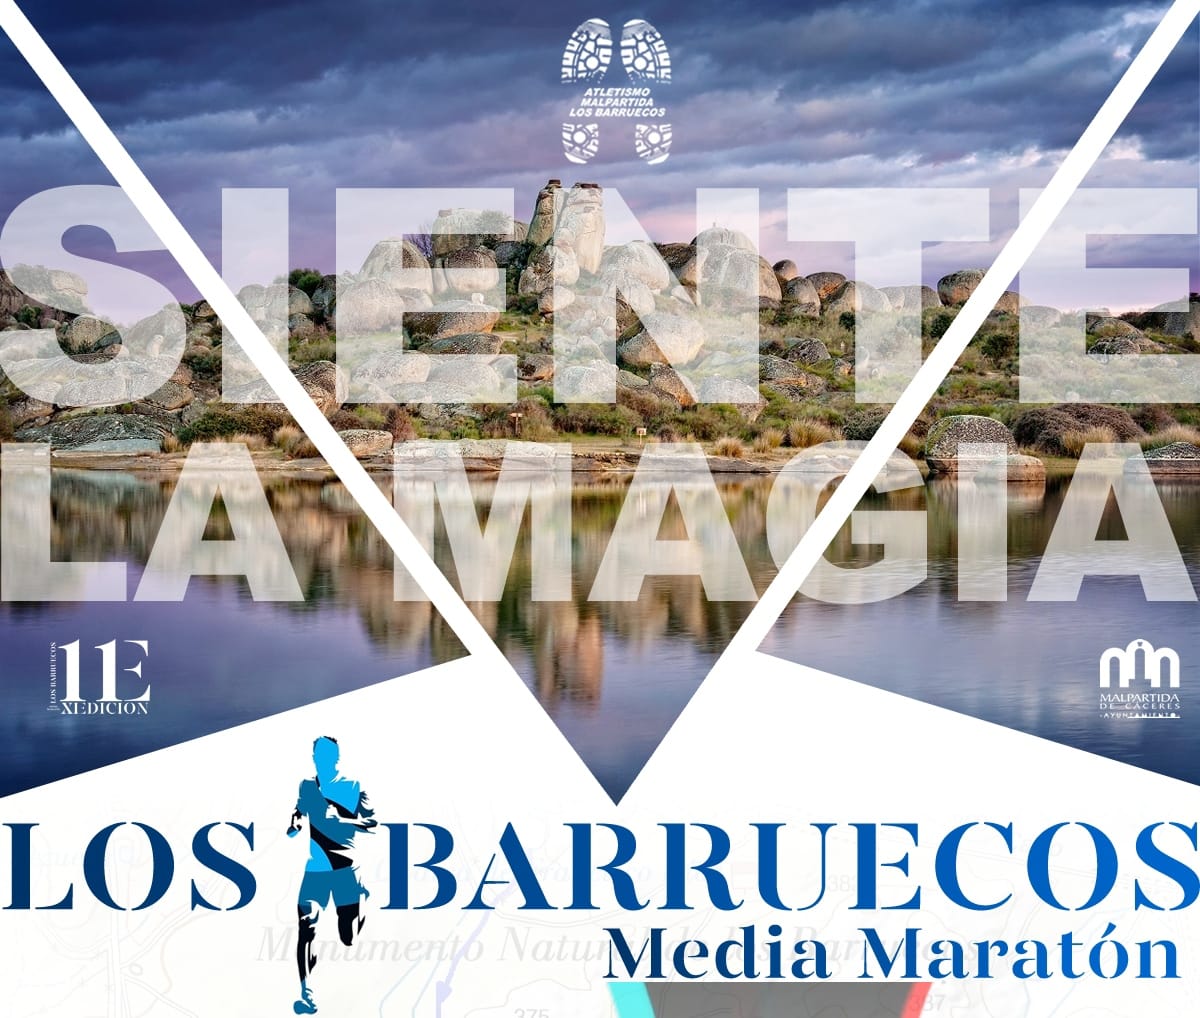 Media Maratón Los Barruecos